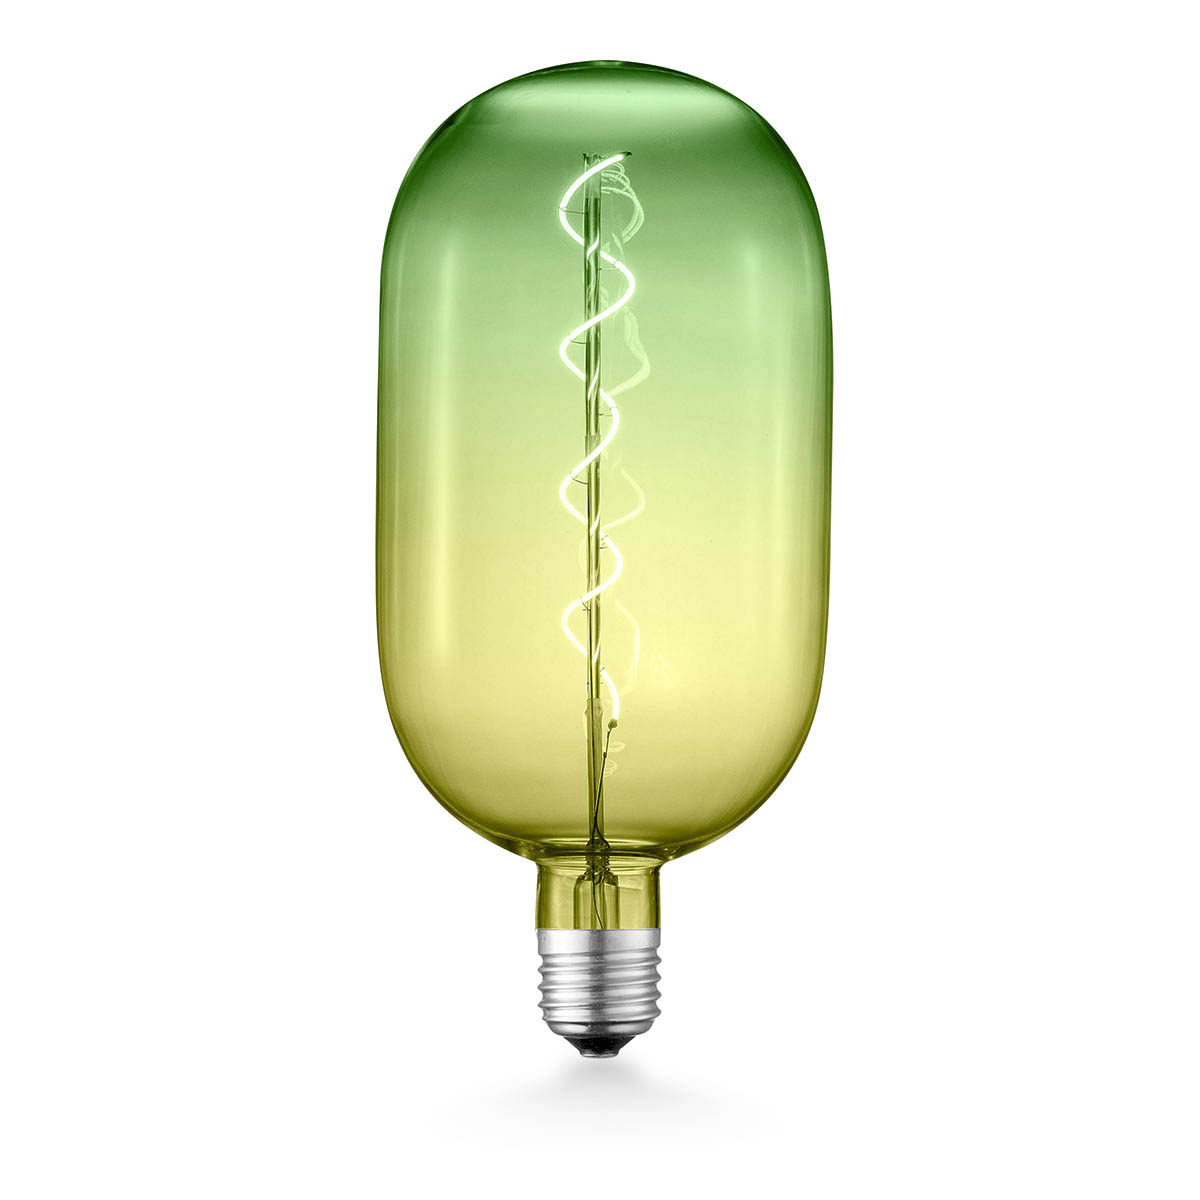 Tangla lighting - TLB-9001-04L - LED Light Bulb Single Spiral filament - 4W gradient color bulb - medium - dusk - dimmable - E27